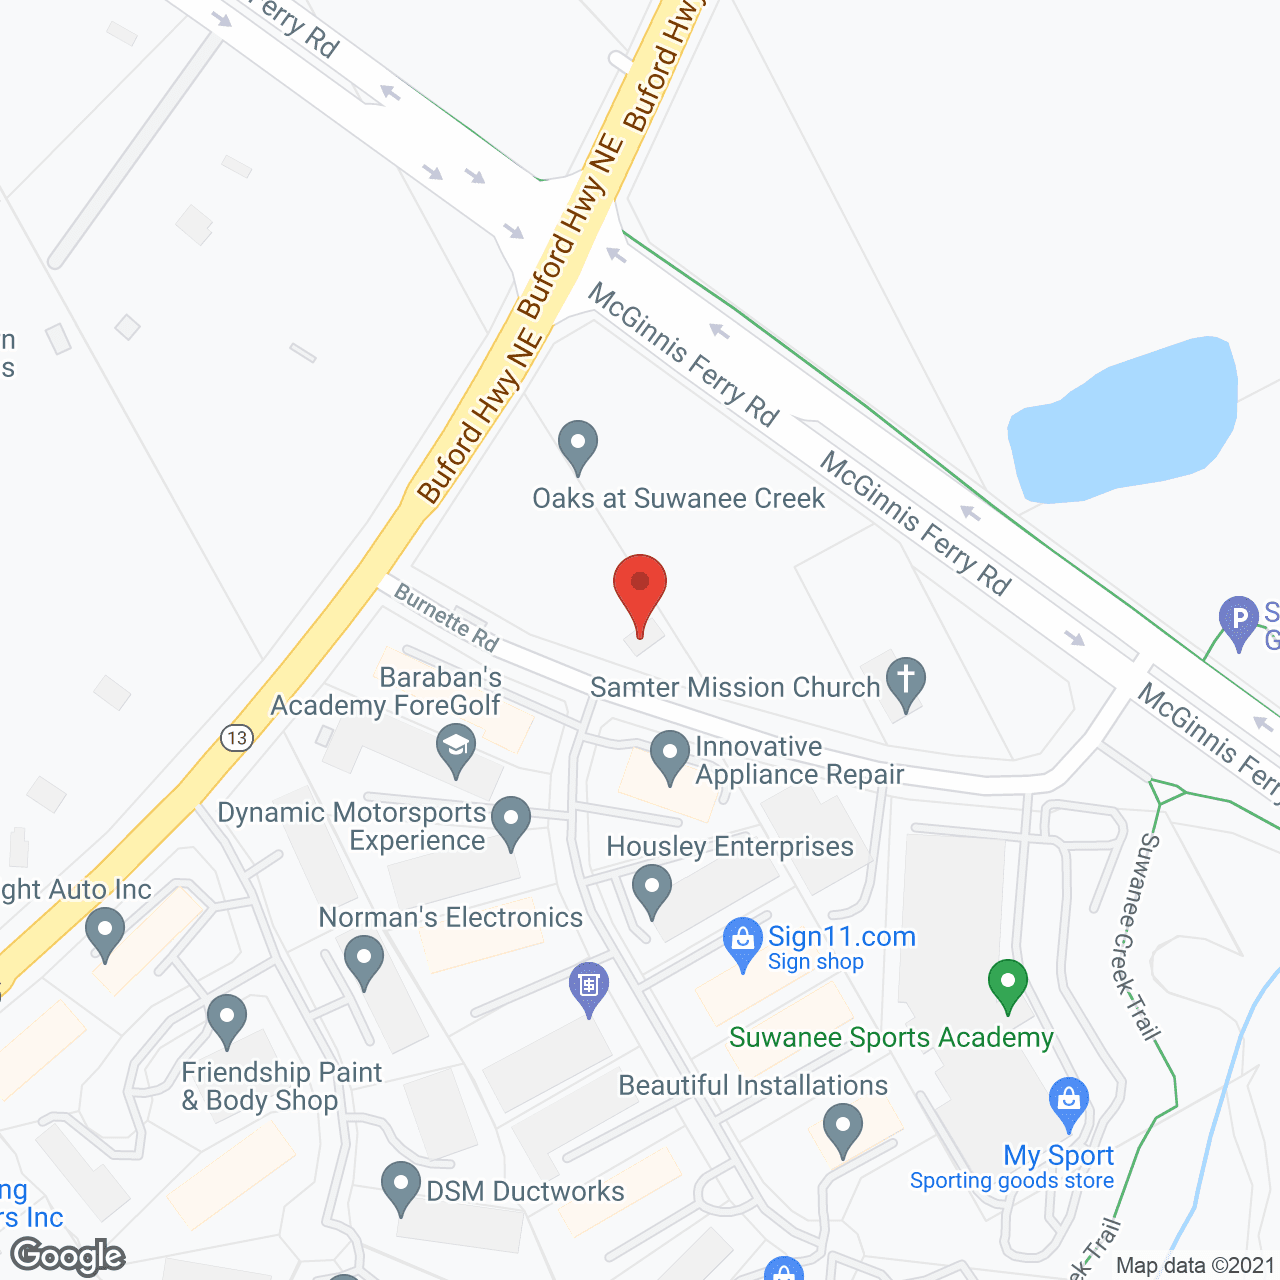 Oaks at Suwanee Creek in google map